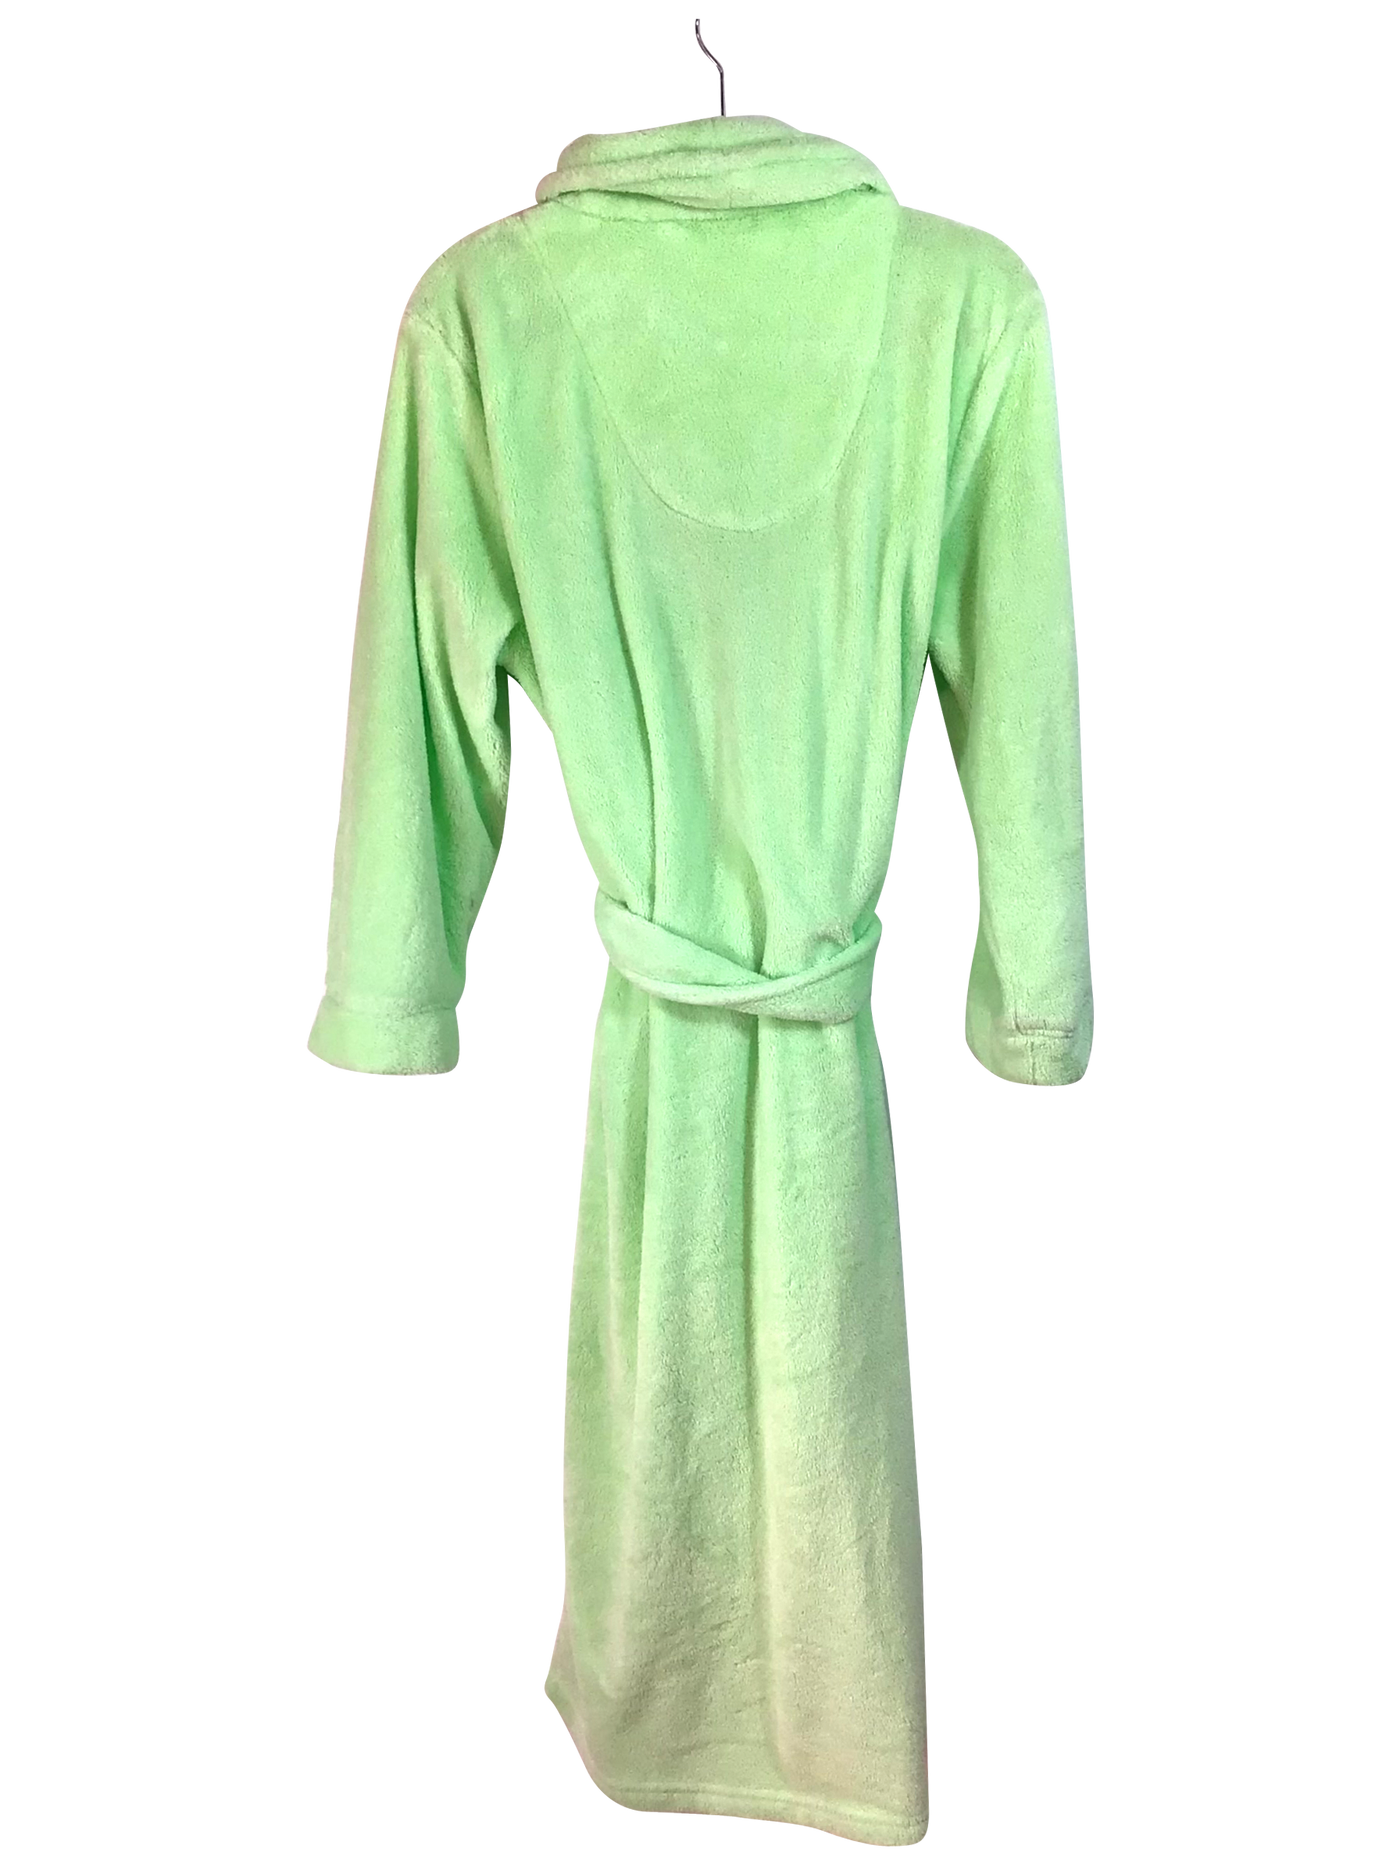 ANNE LEWIN NEW YORK Lingerie Robe Regular fit in Green - Size M | 15 $ KOOP